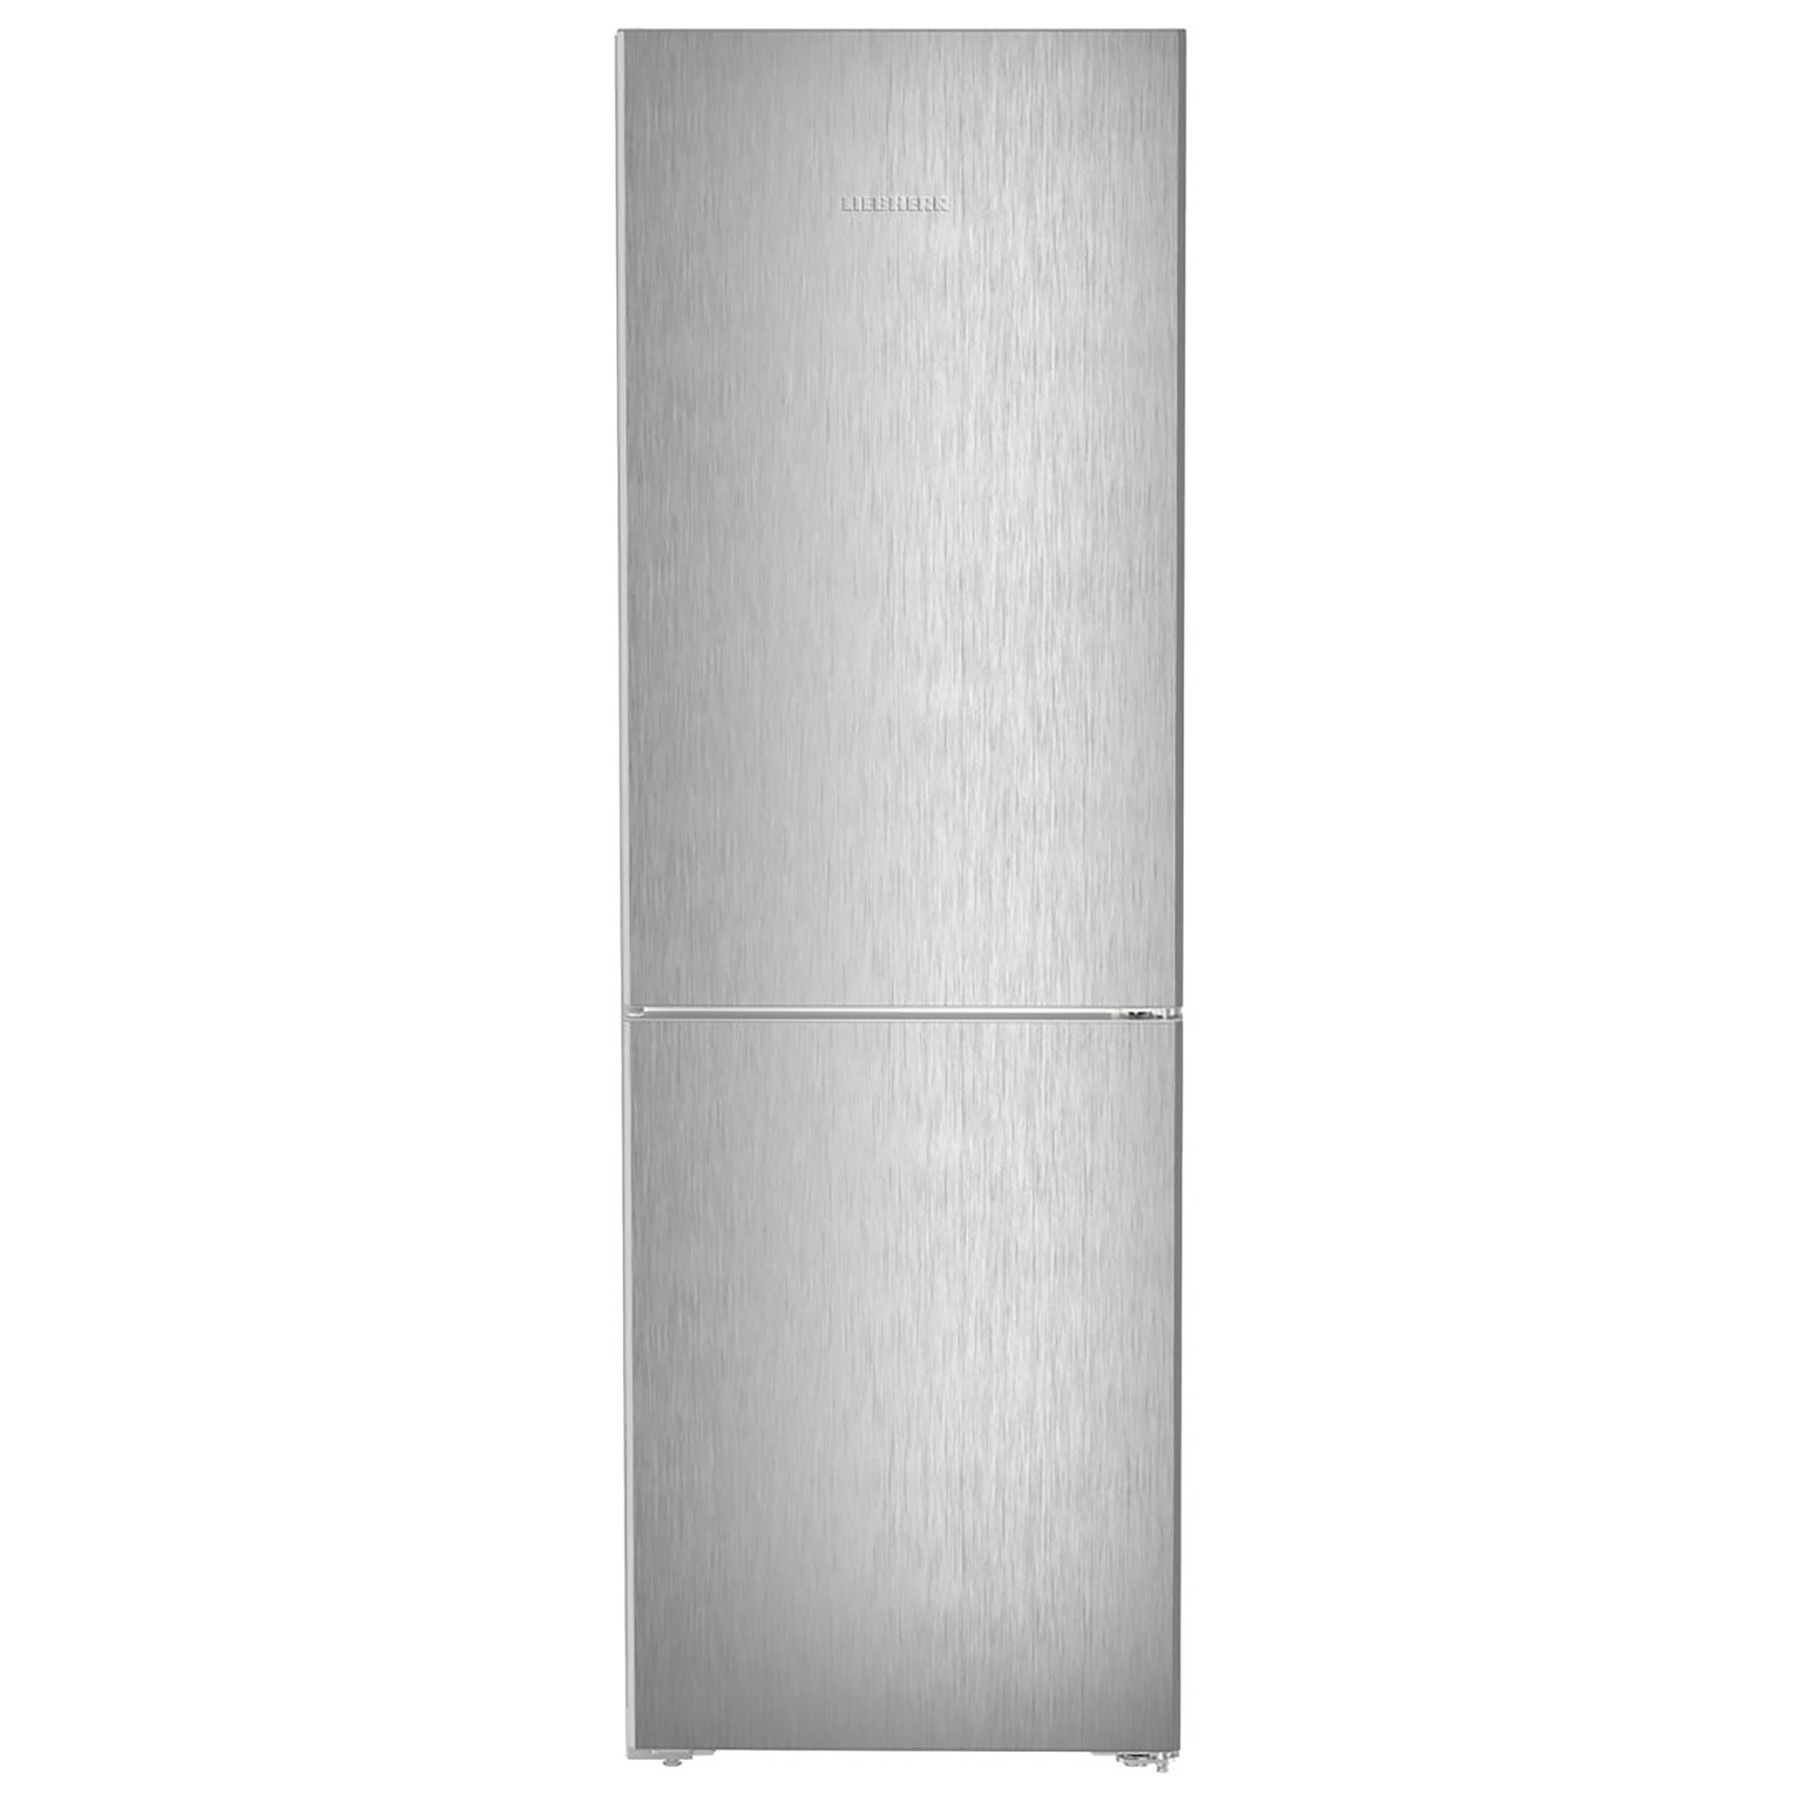 Liebherr CNSFD5223 60cm NoFrost Fridge Freezer in Silver 1 85m D Rated